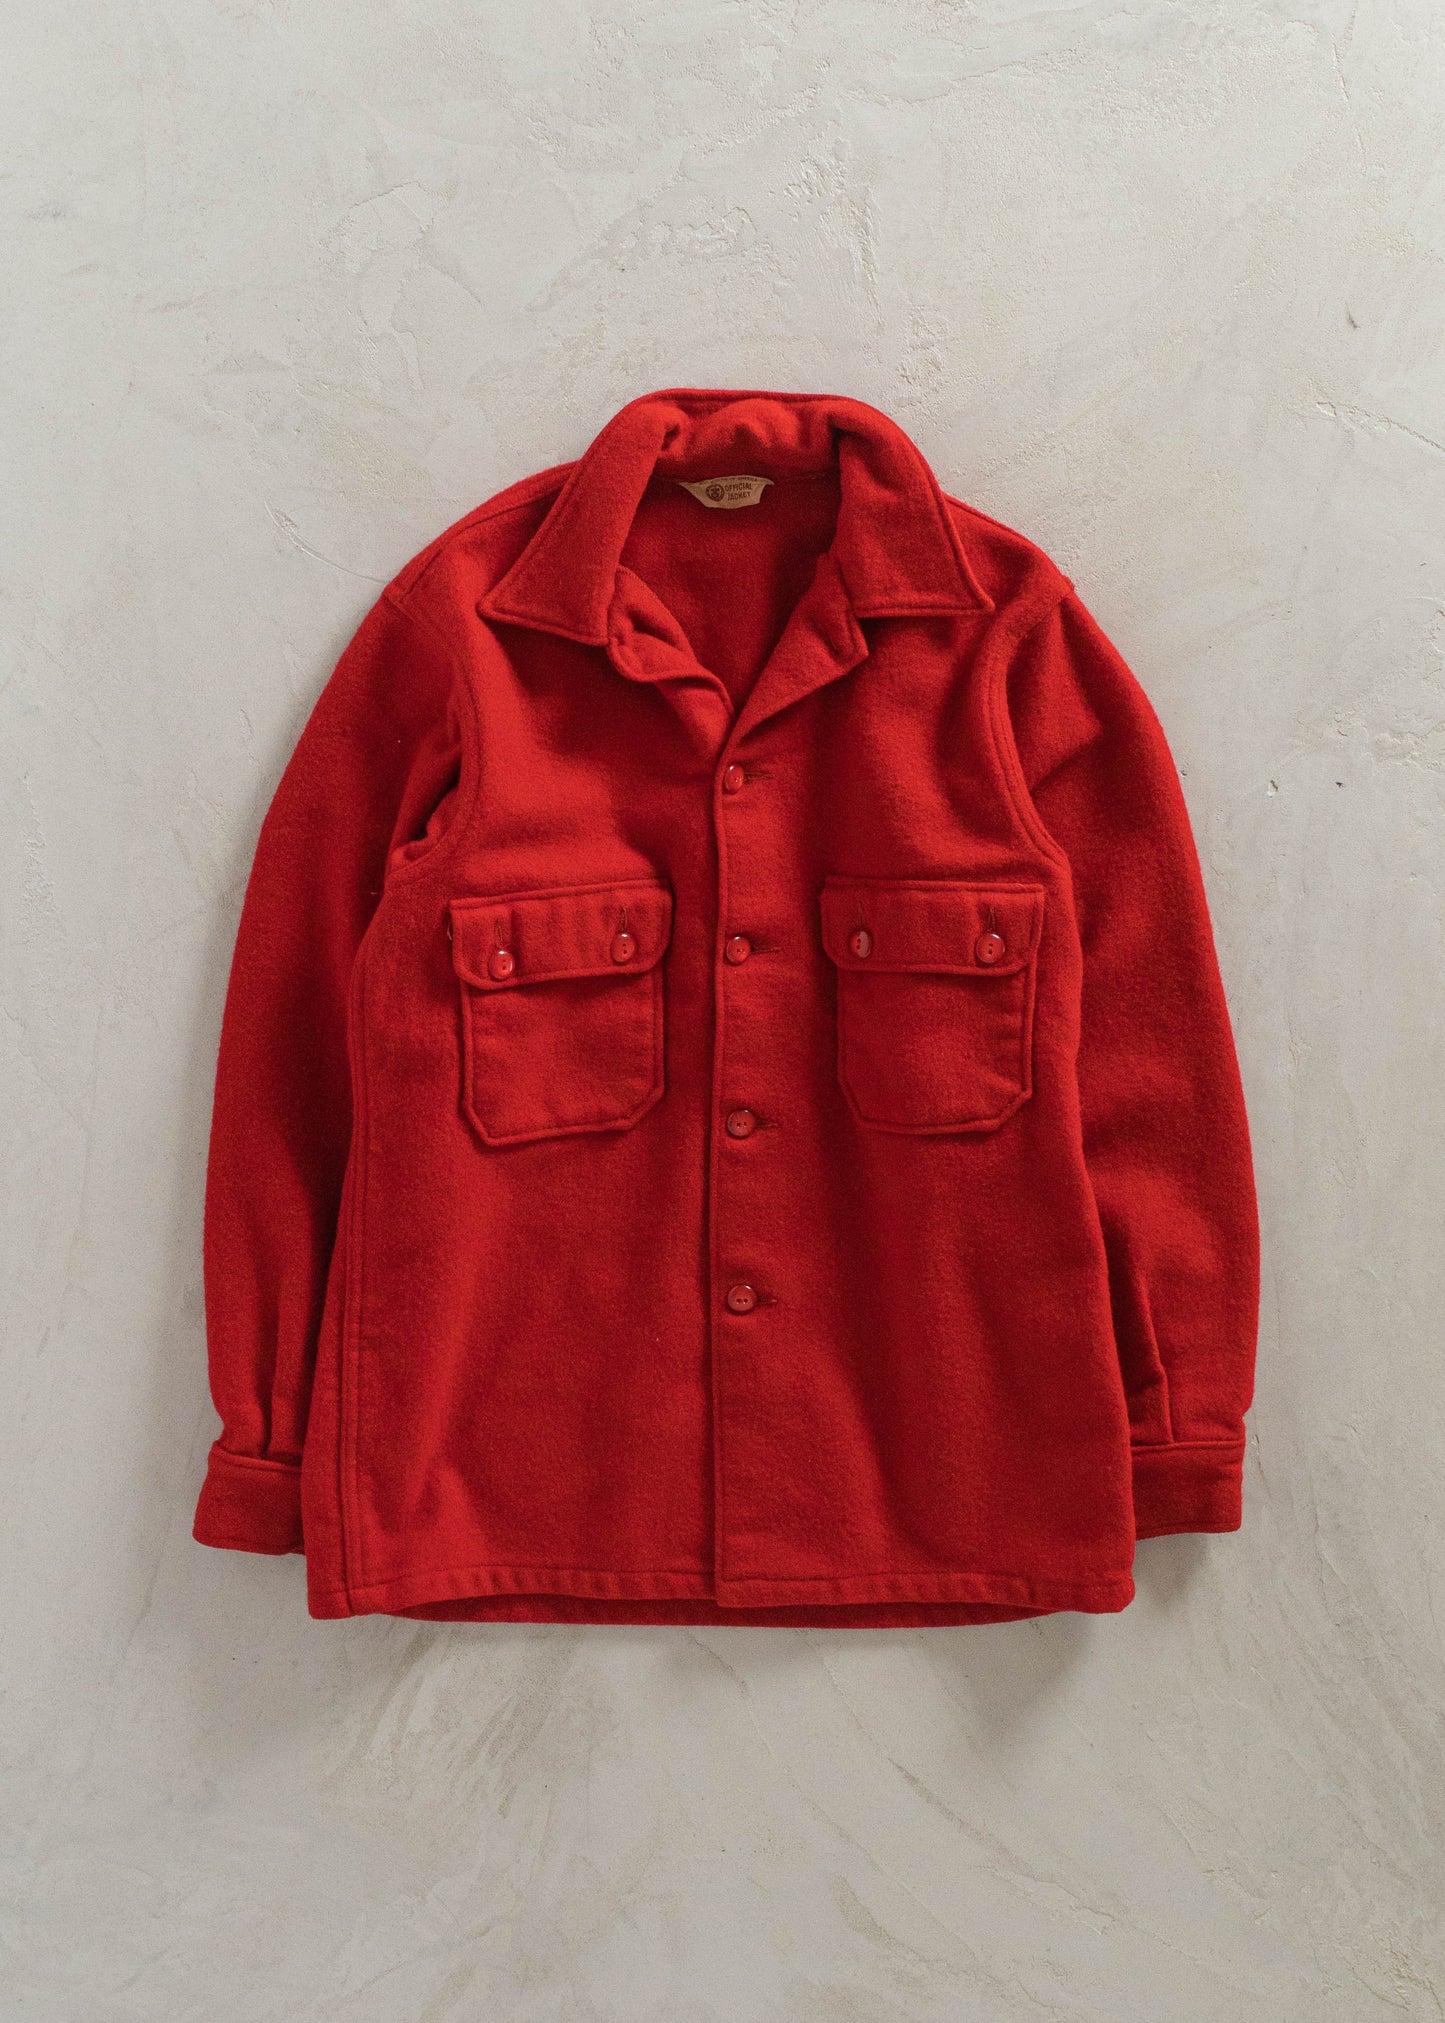 1960s Boy Scouts of America Flannel Jacket Size M/L